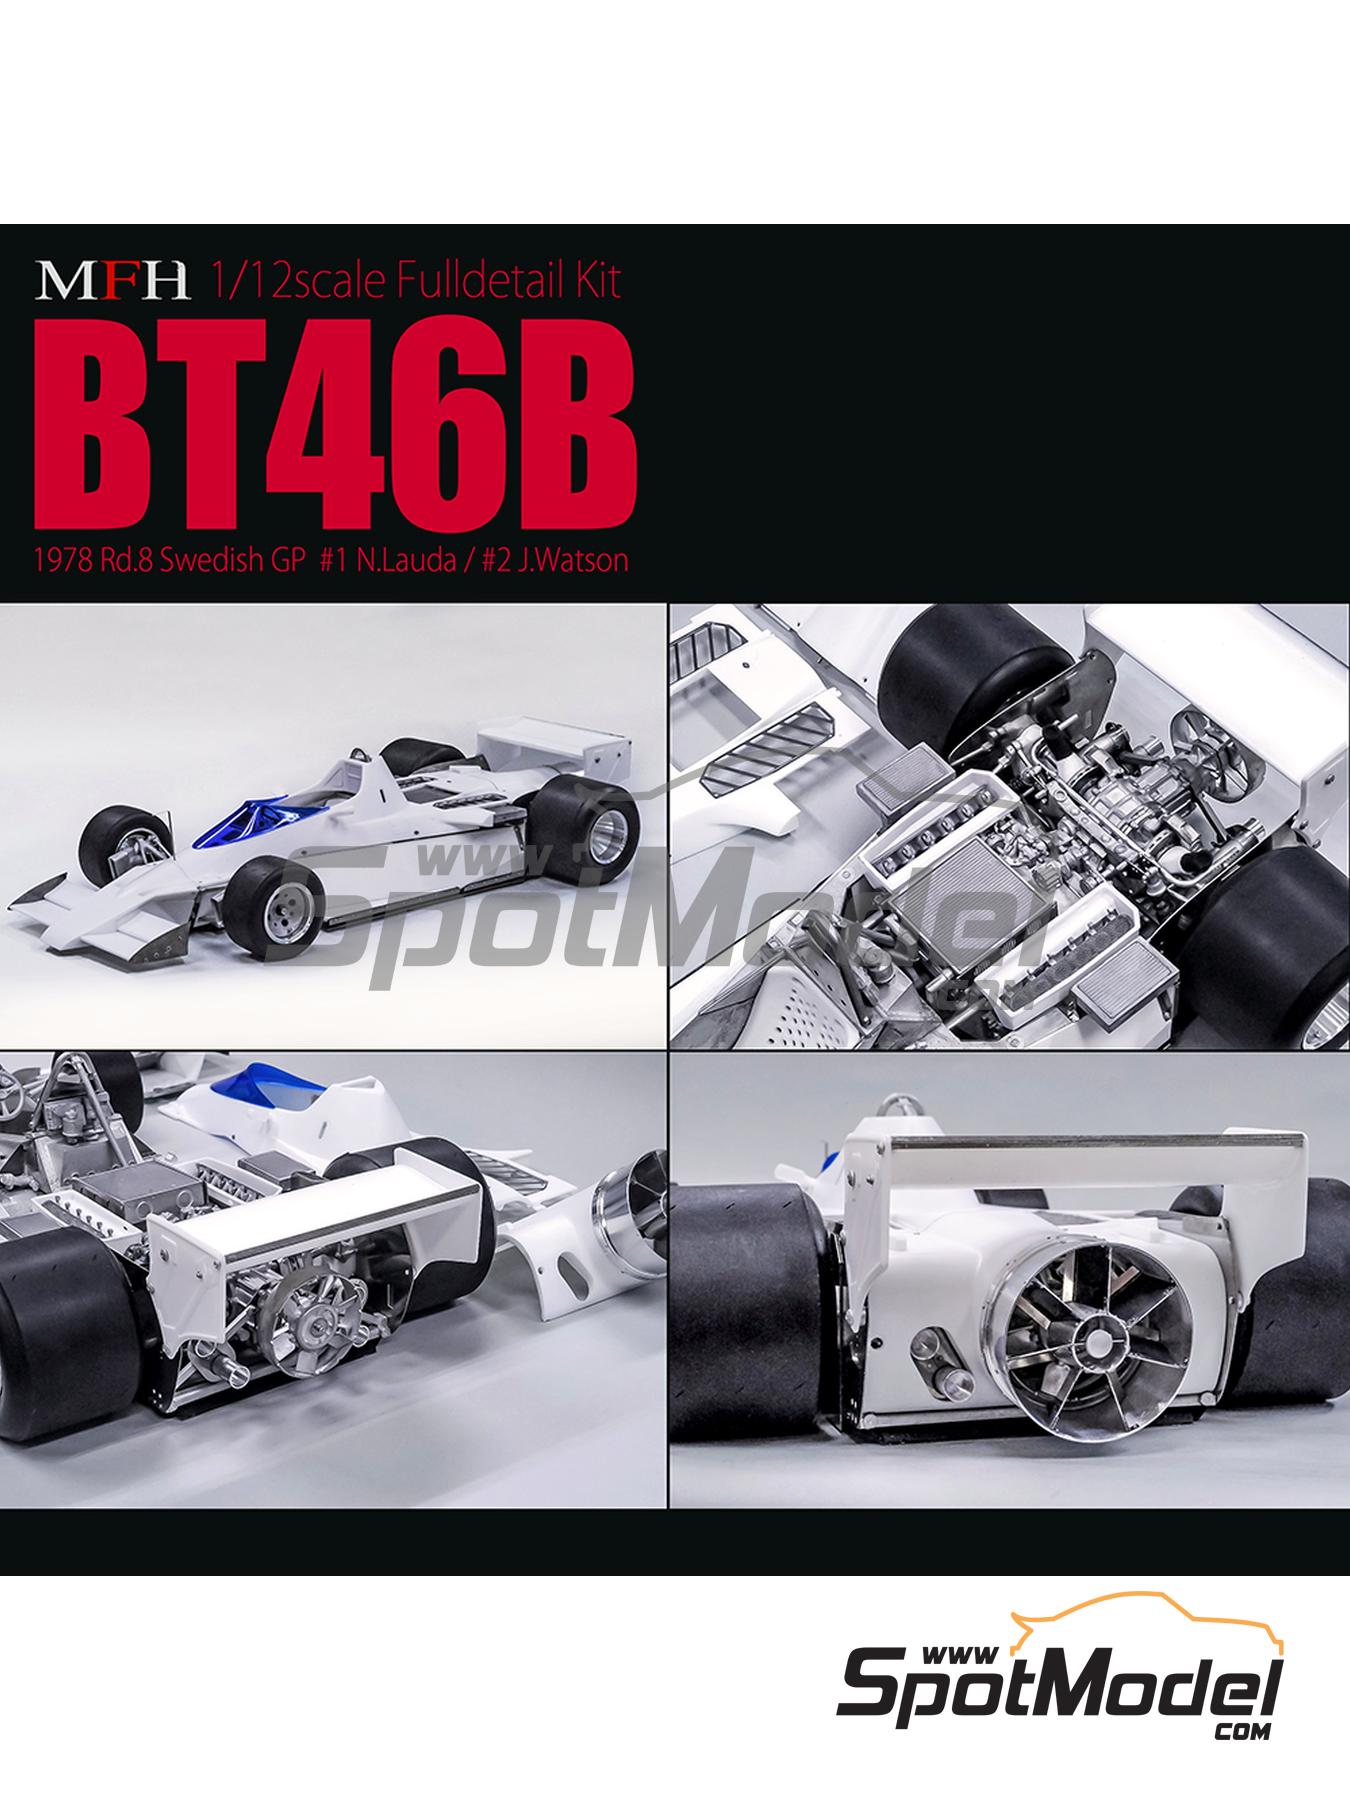 Model Factory Hiro K461: Car scale model kit 1/12 scale - Brabham BT46B  Brabham Racing Organisation Team sponsored by Parmalat #1, 2 - Niki Lauda  (AT), John Watson (GB) - Swedish Formula